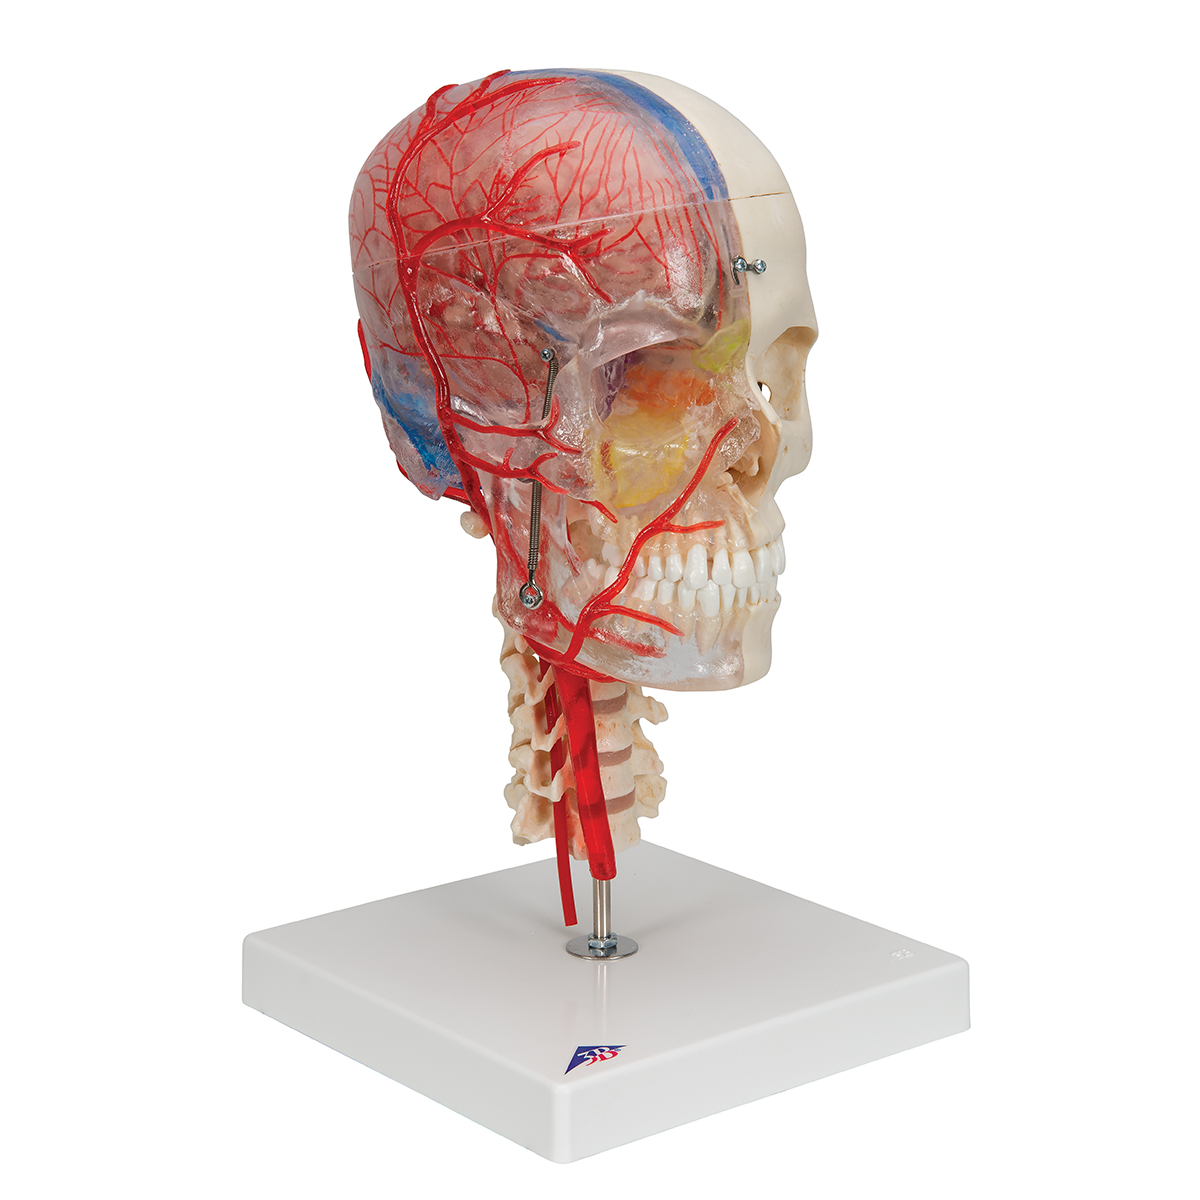 Skeleton Has Brain Handsbrain Skeletonmodel Skeleton Stock Photo 186566696